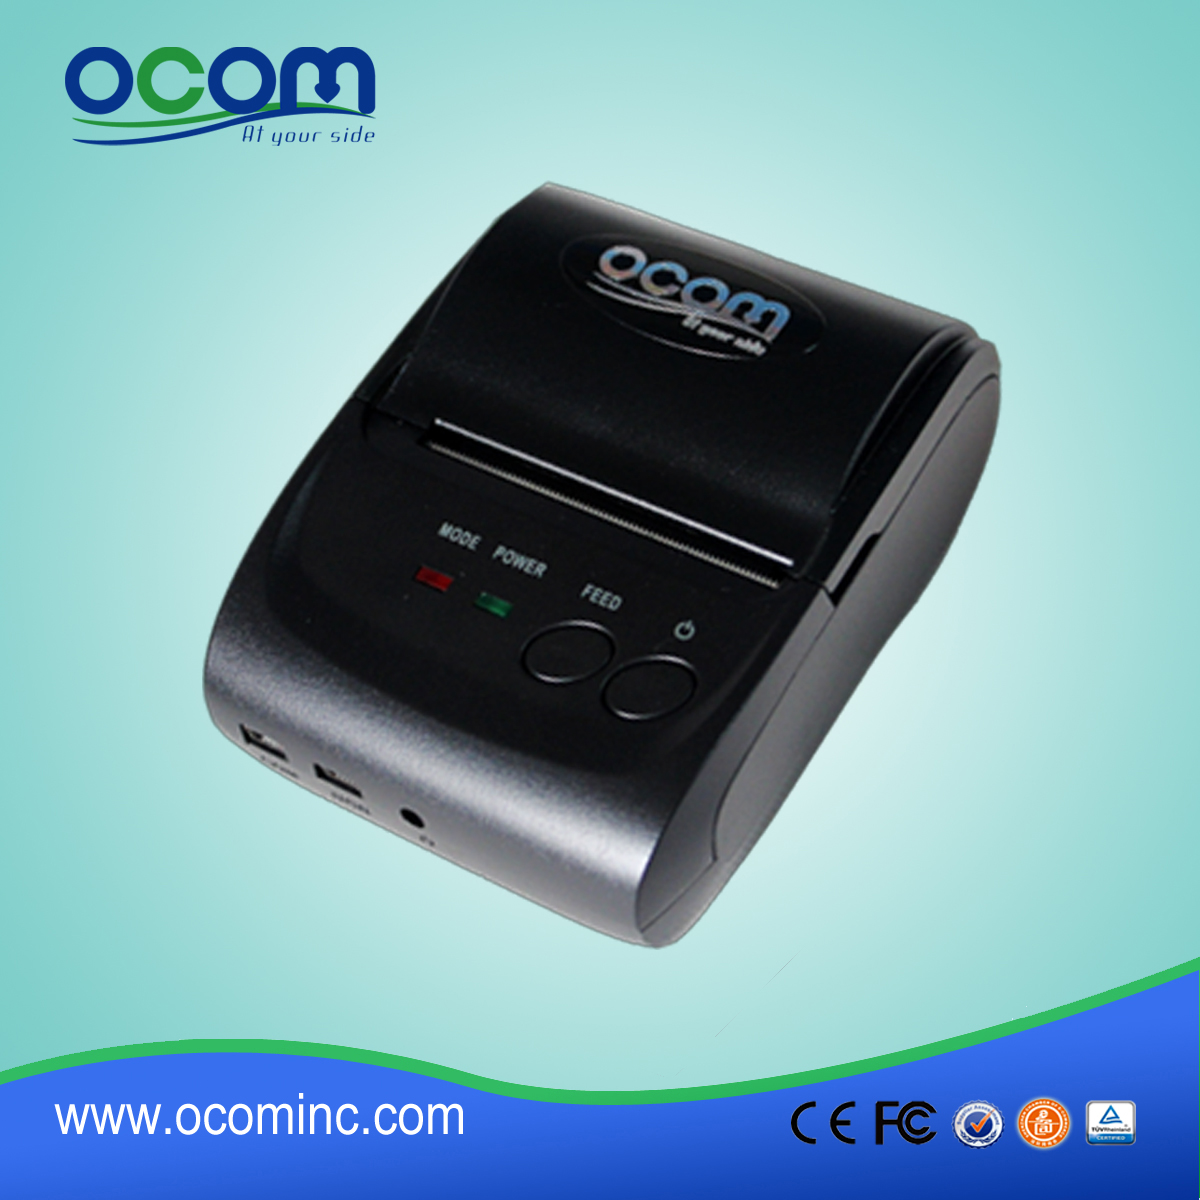 OCPP-M05: impresora de la posición de la impresora térmica androide confiable, impresora térmica de código qr